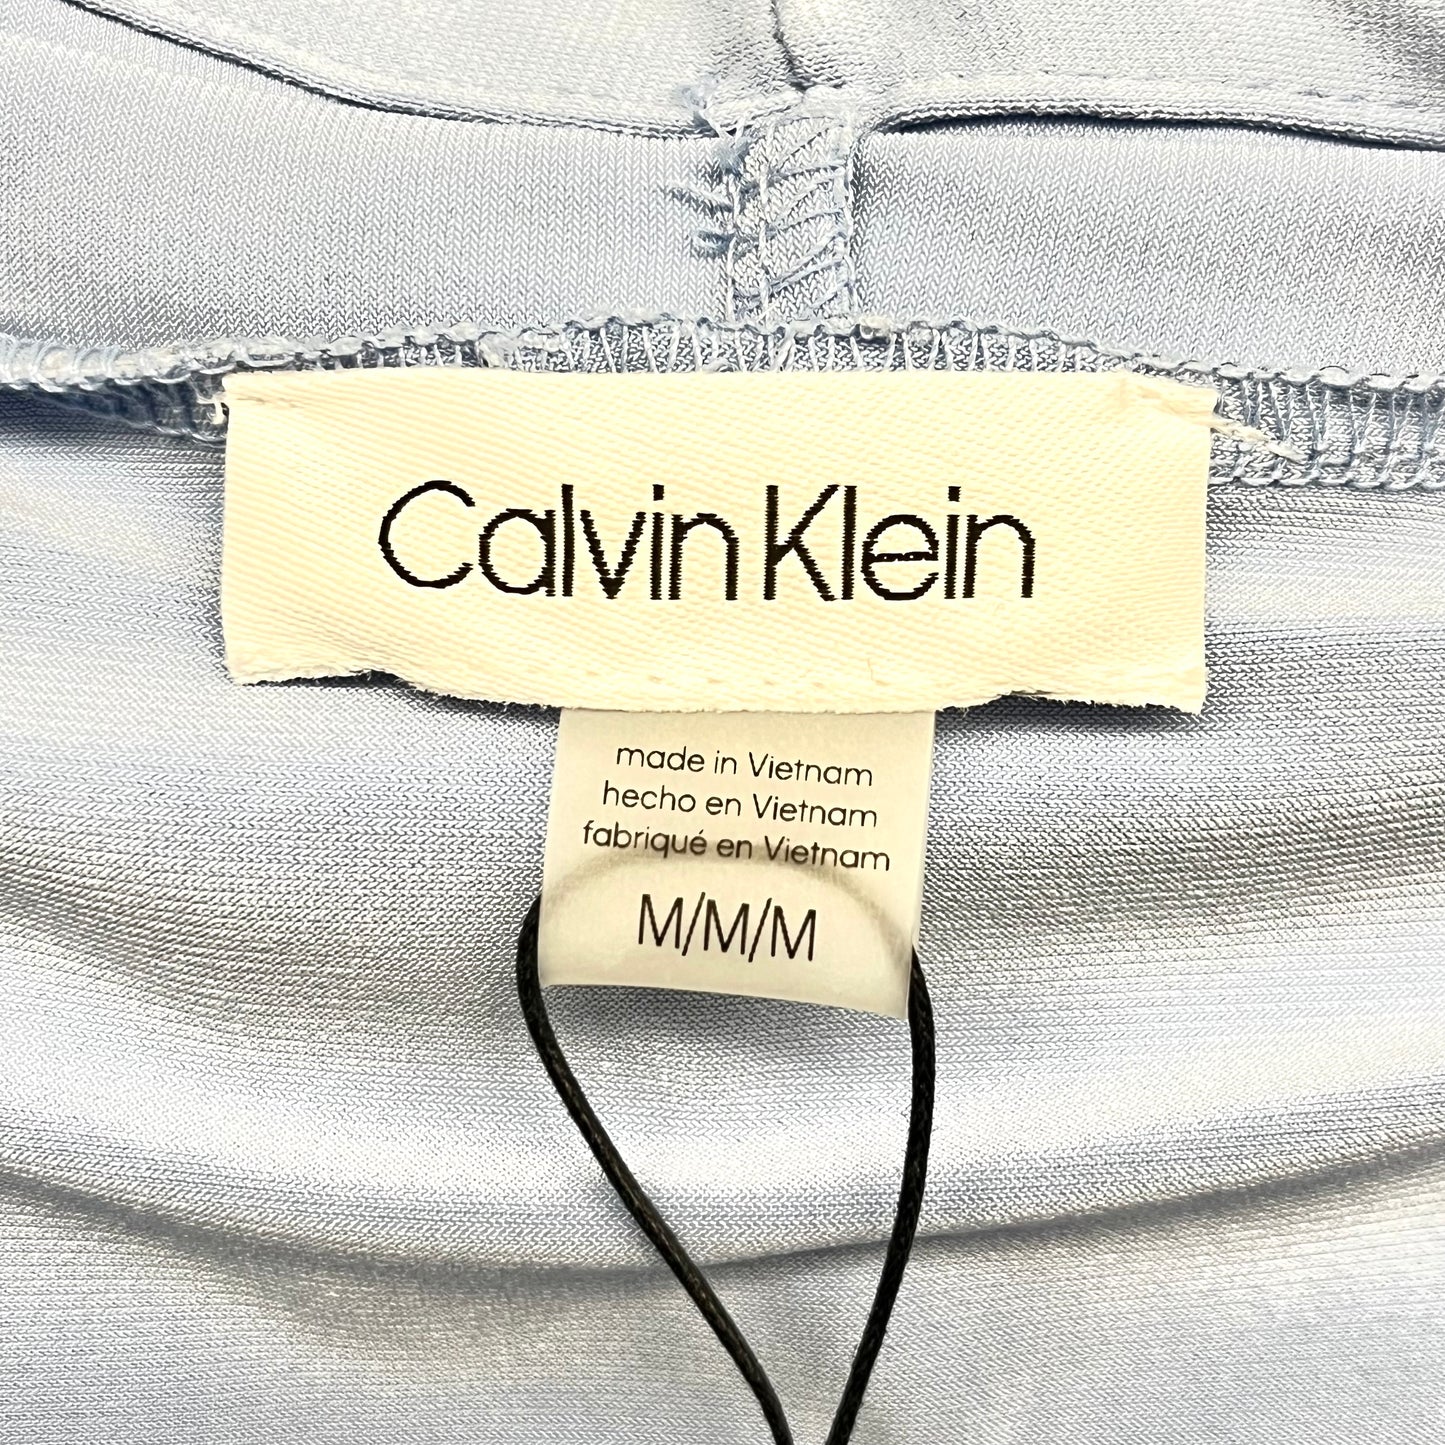 Blouse Sleeveless By Calvin Klein  Size: M